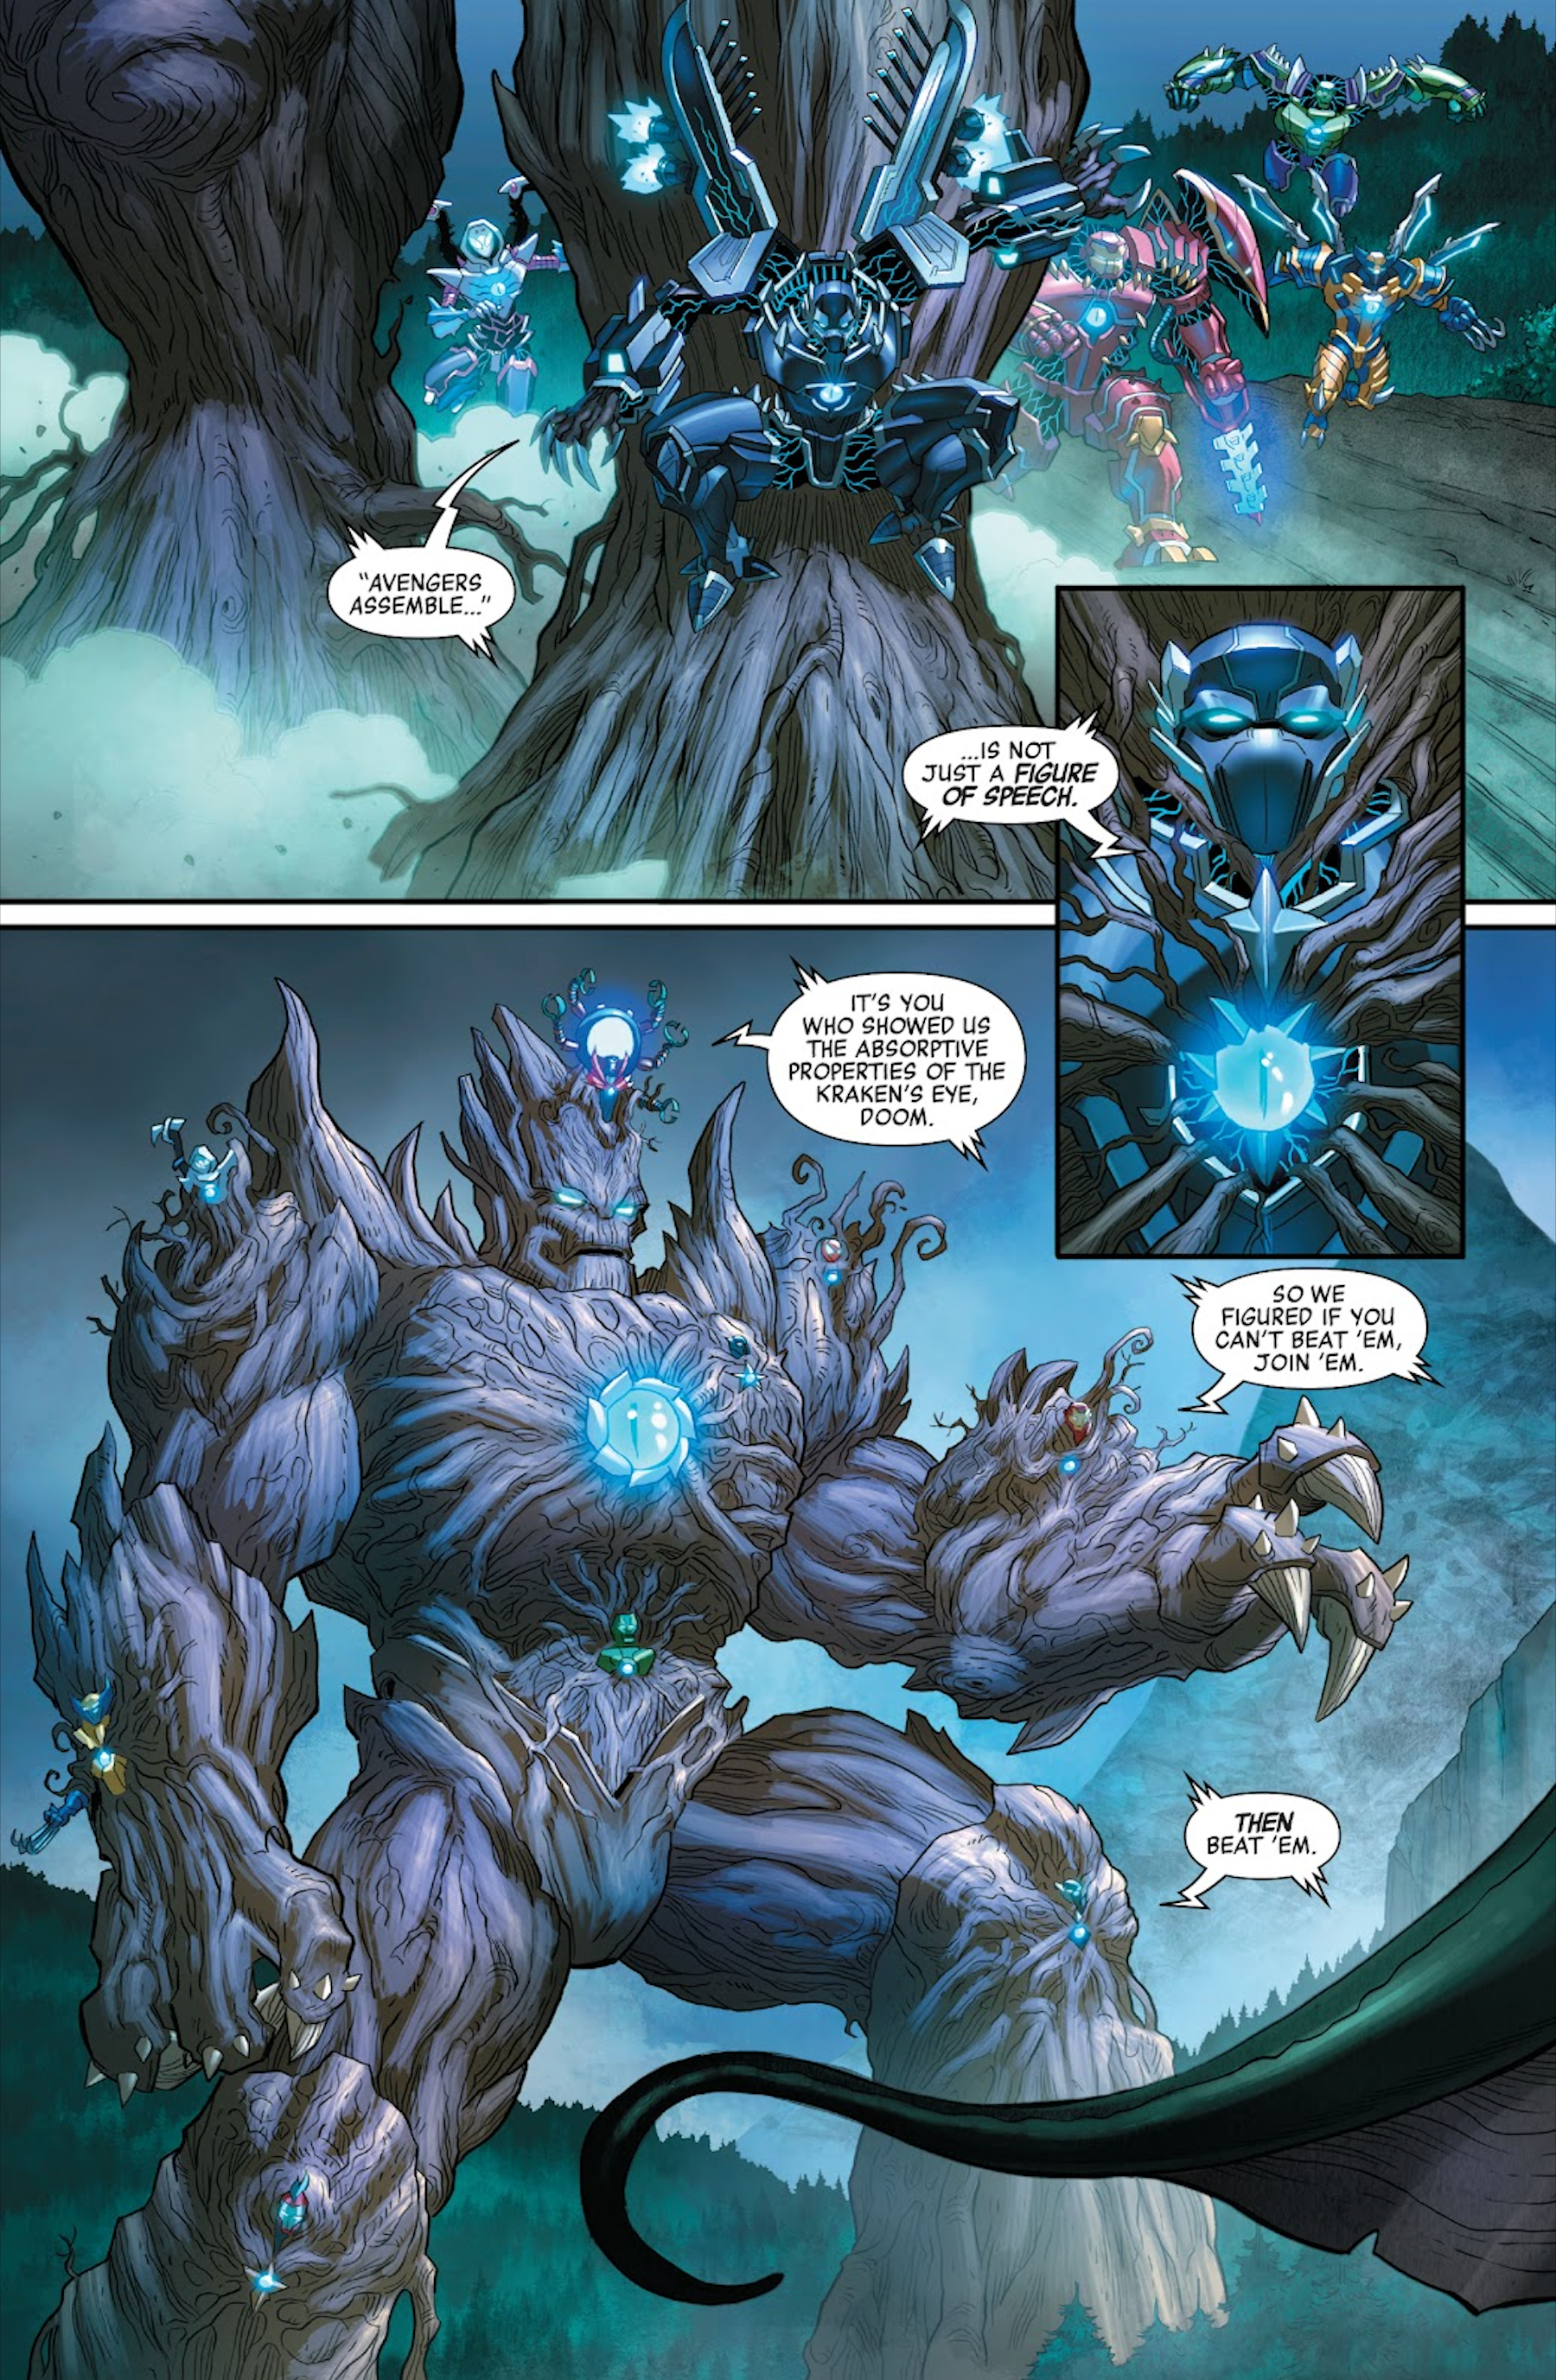 Groot Returns To His Original, Giant Form in Marvel Comics